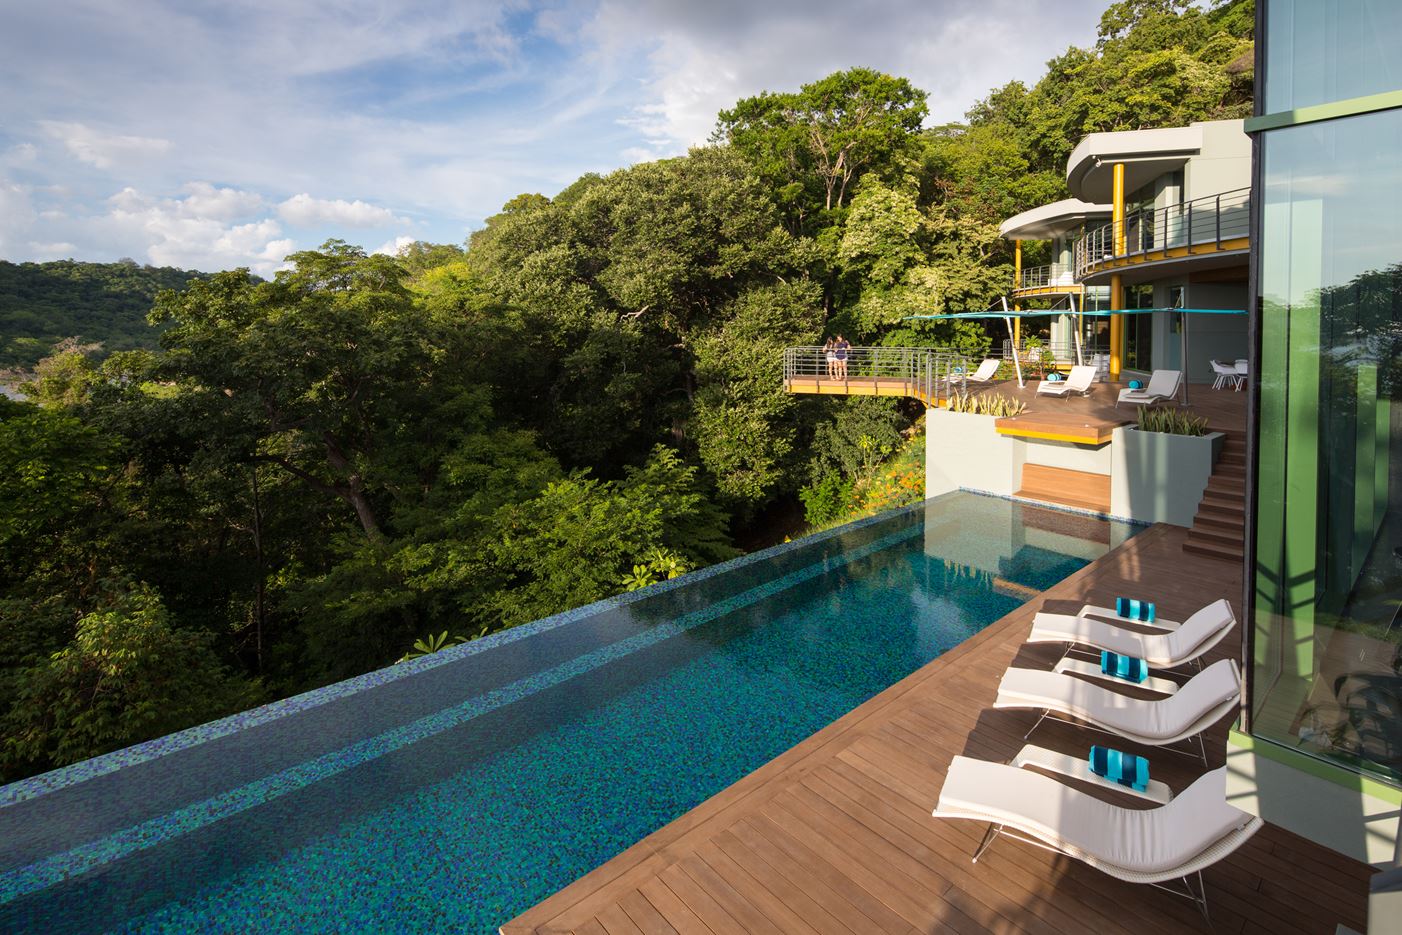 Casa Magayon in Papagayo, Costa Rica by SARCO Architects